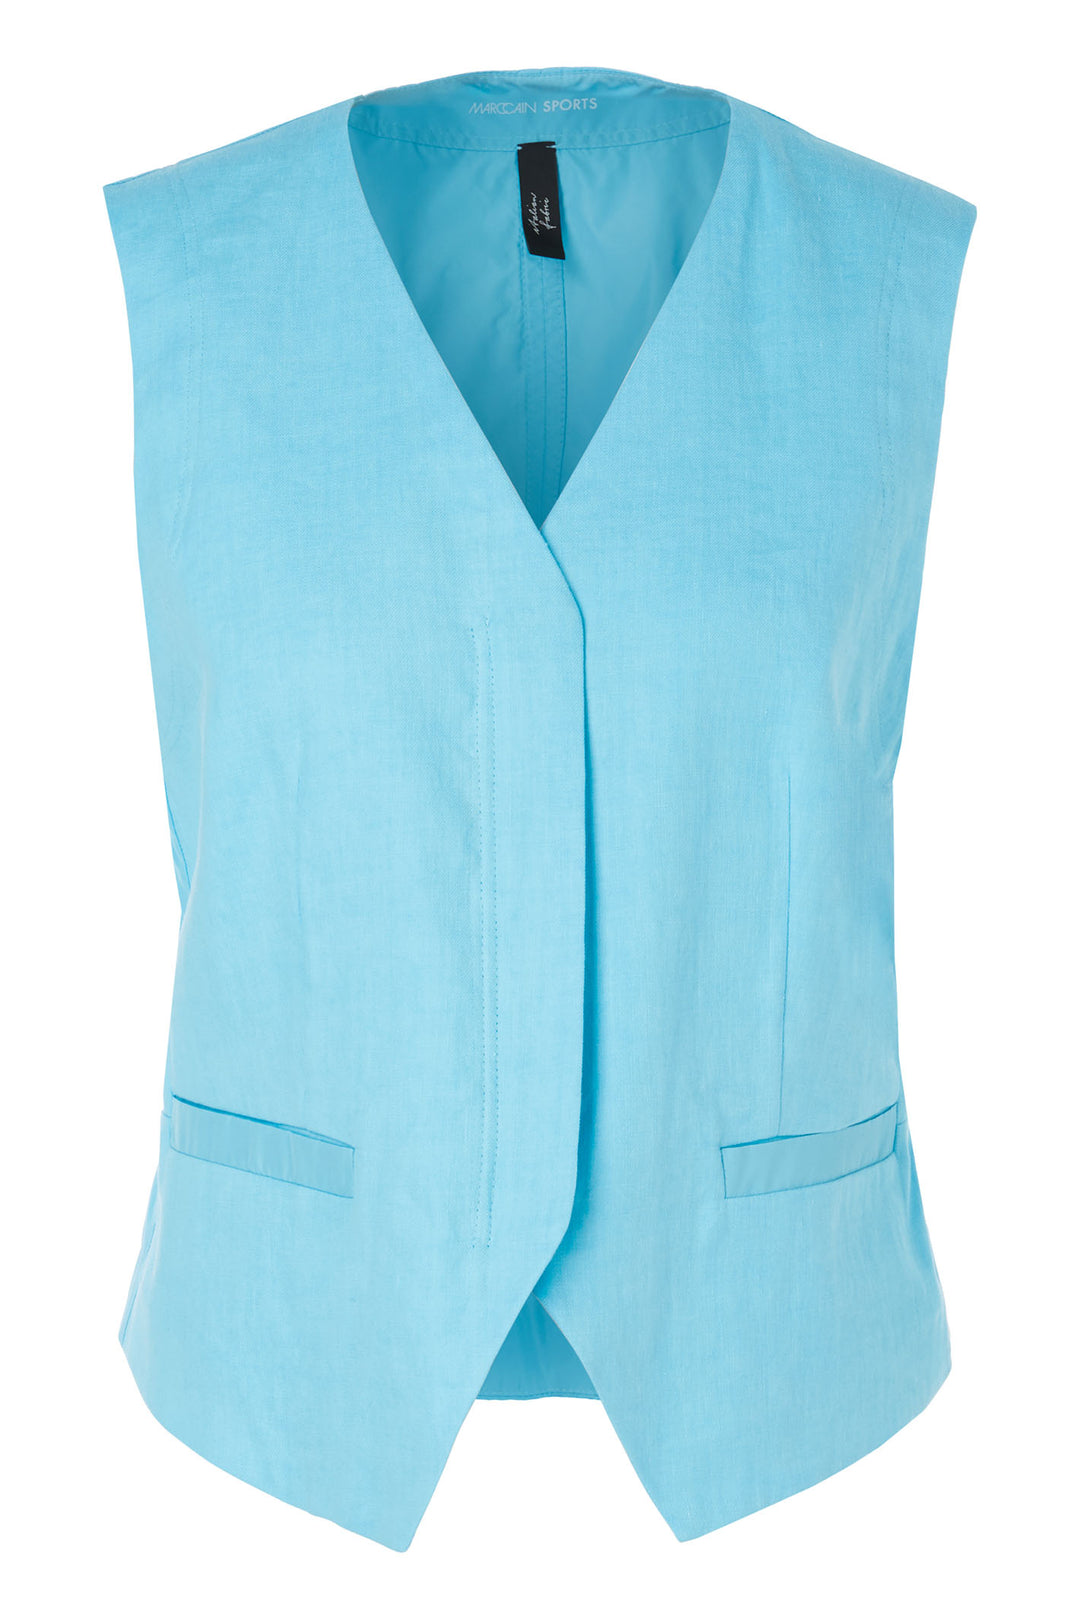 Marc Cain Sports WS 37.04 W03 339 Turquoise Blue Zip Waistcoat - Olivia Grace Fashion